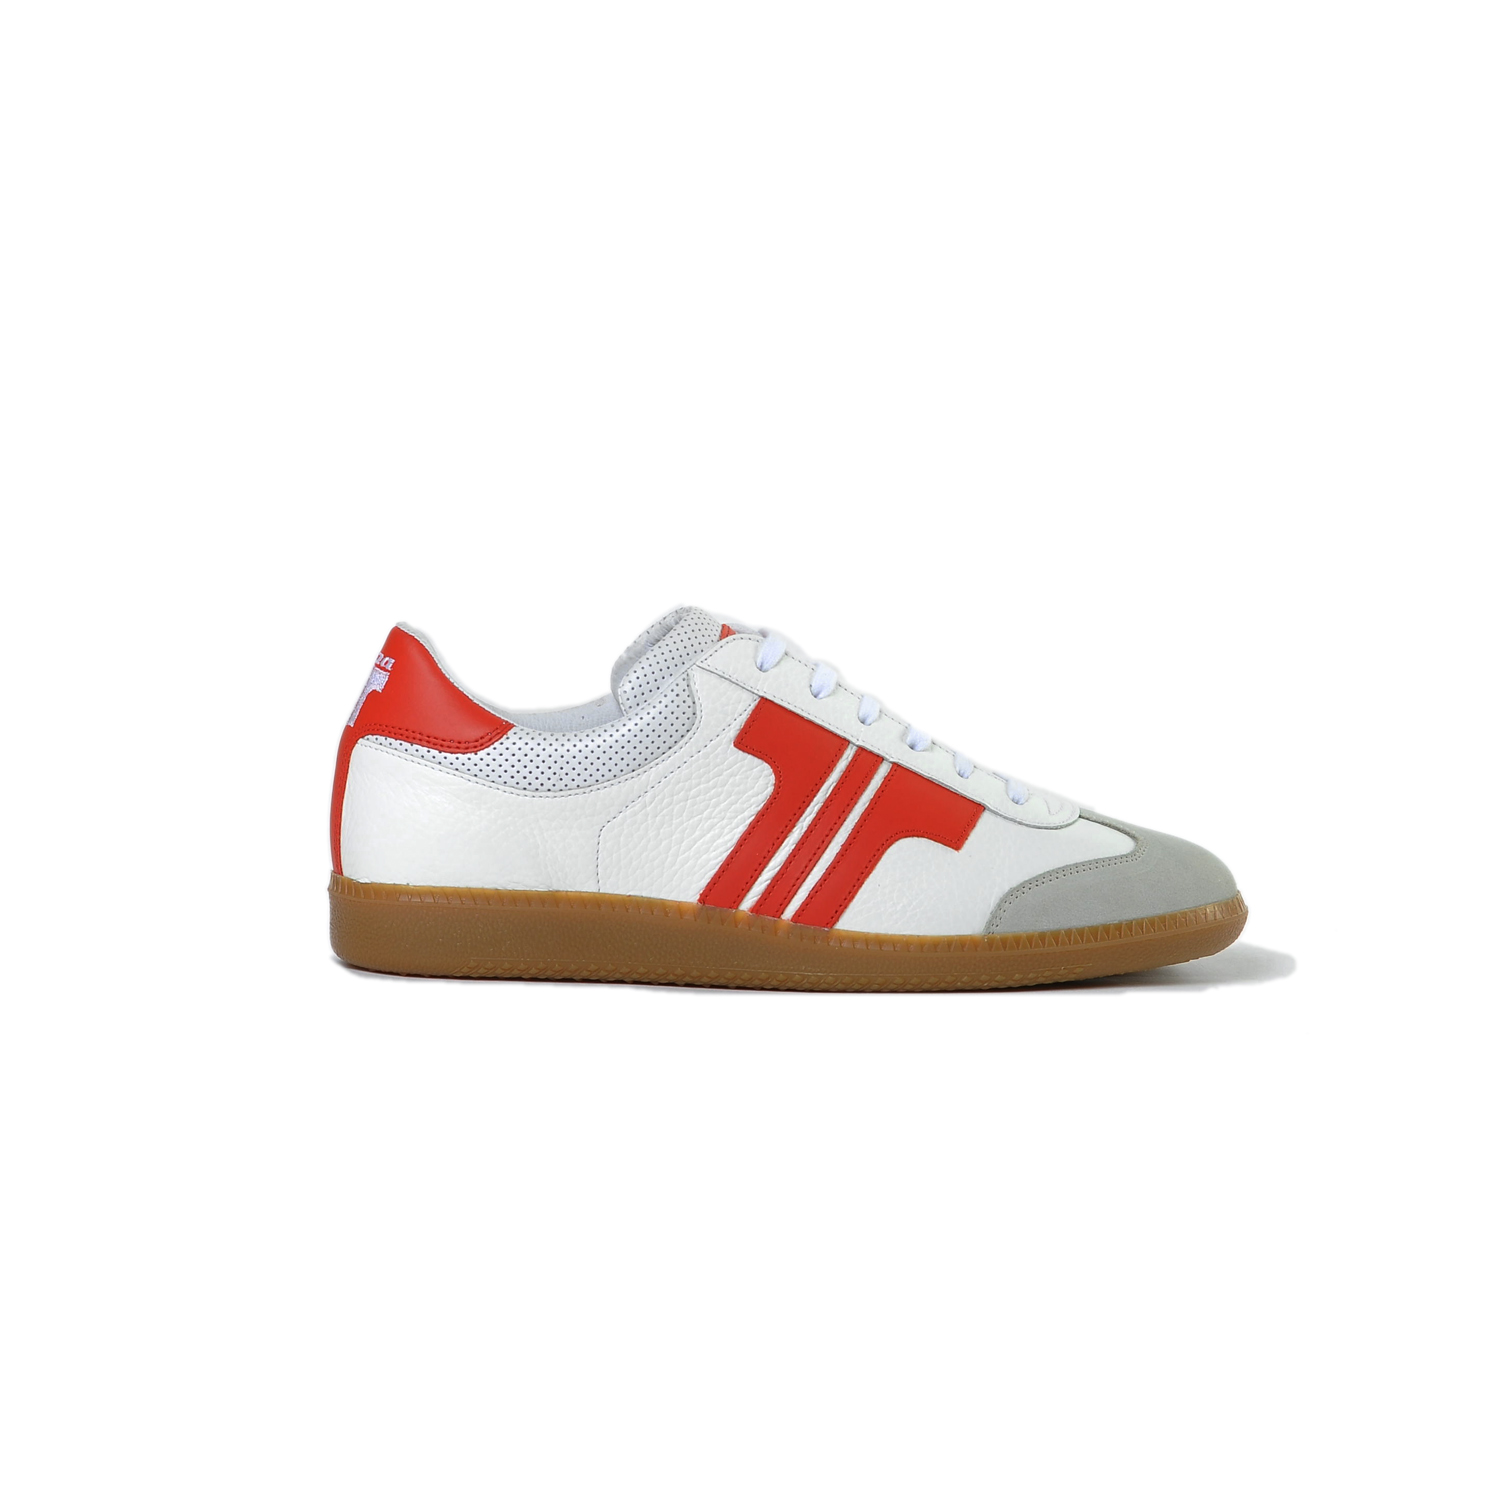 Tisza shoes - Compakt - White-red